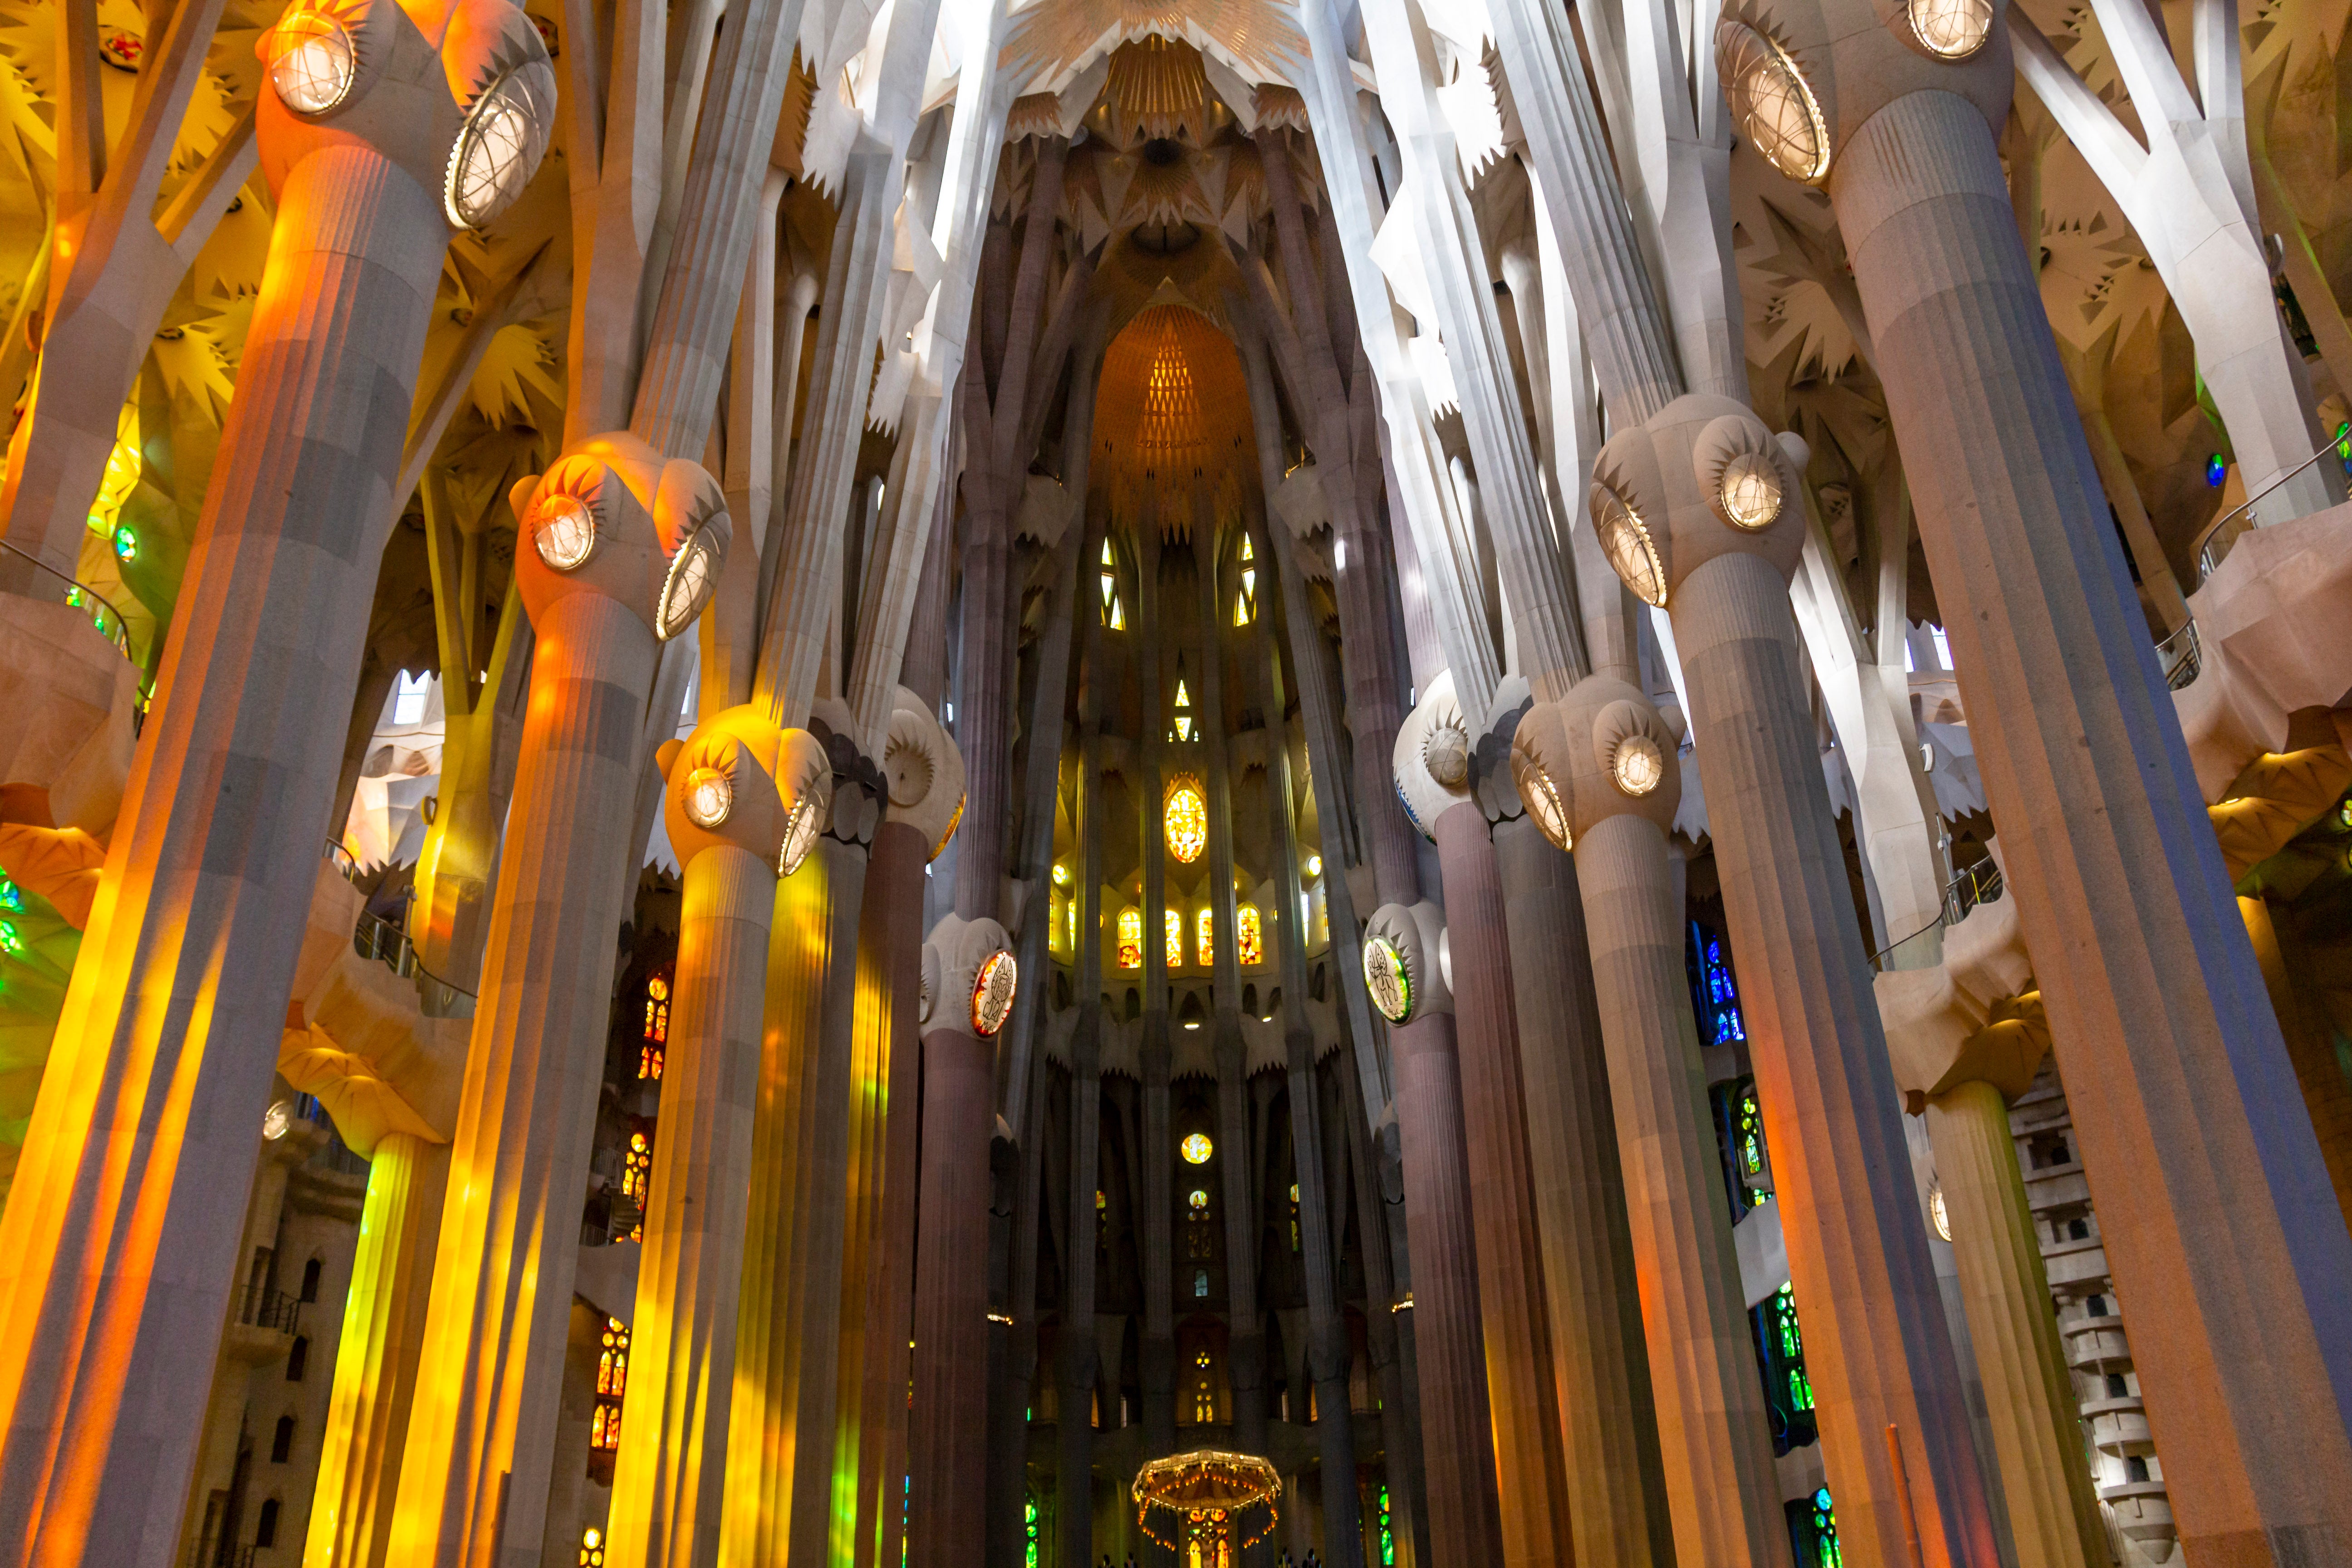 The interior of the Sagrada Familia